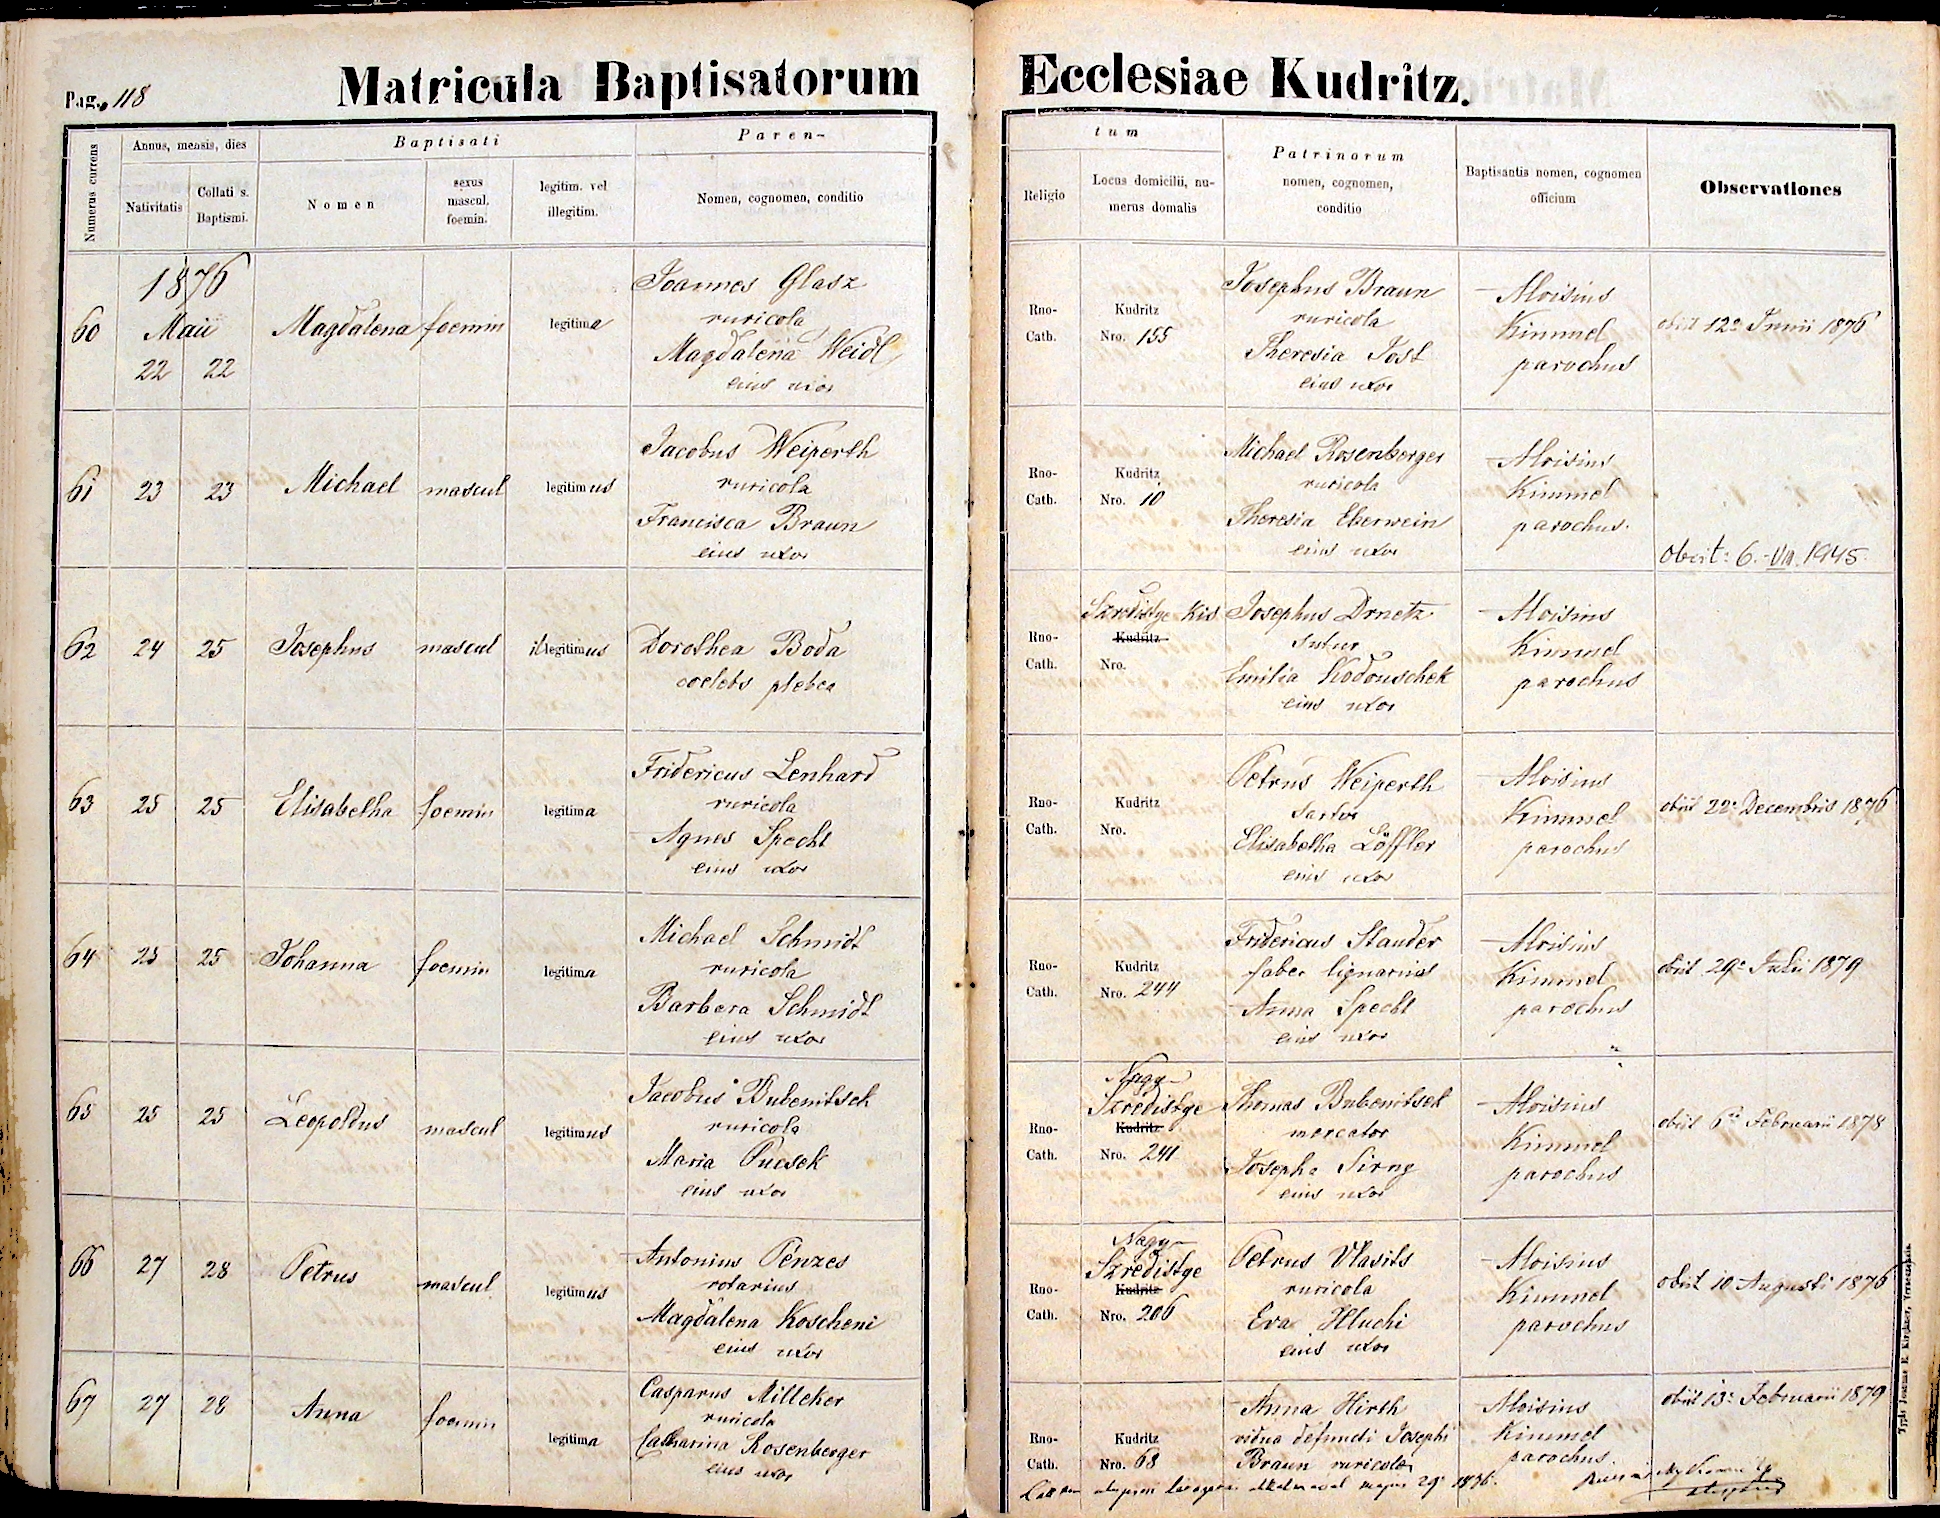 images/church_records/BIRTHS/1884-1899B/1891/118